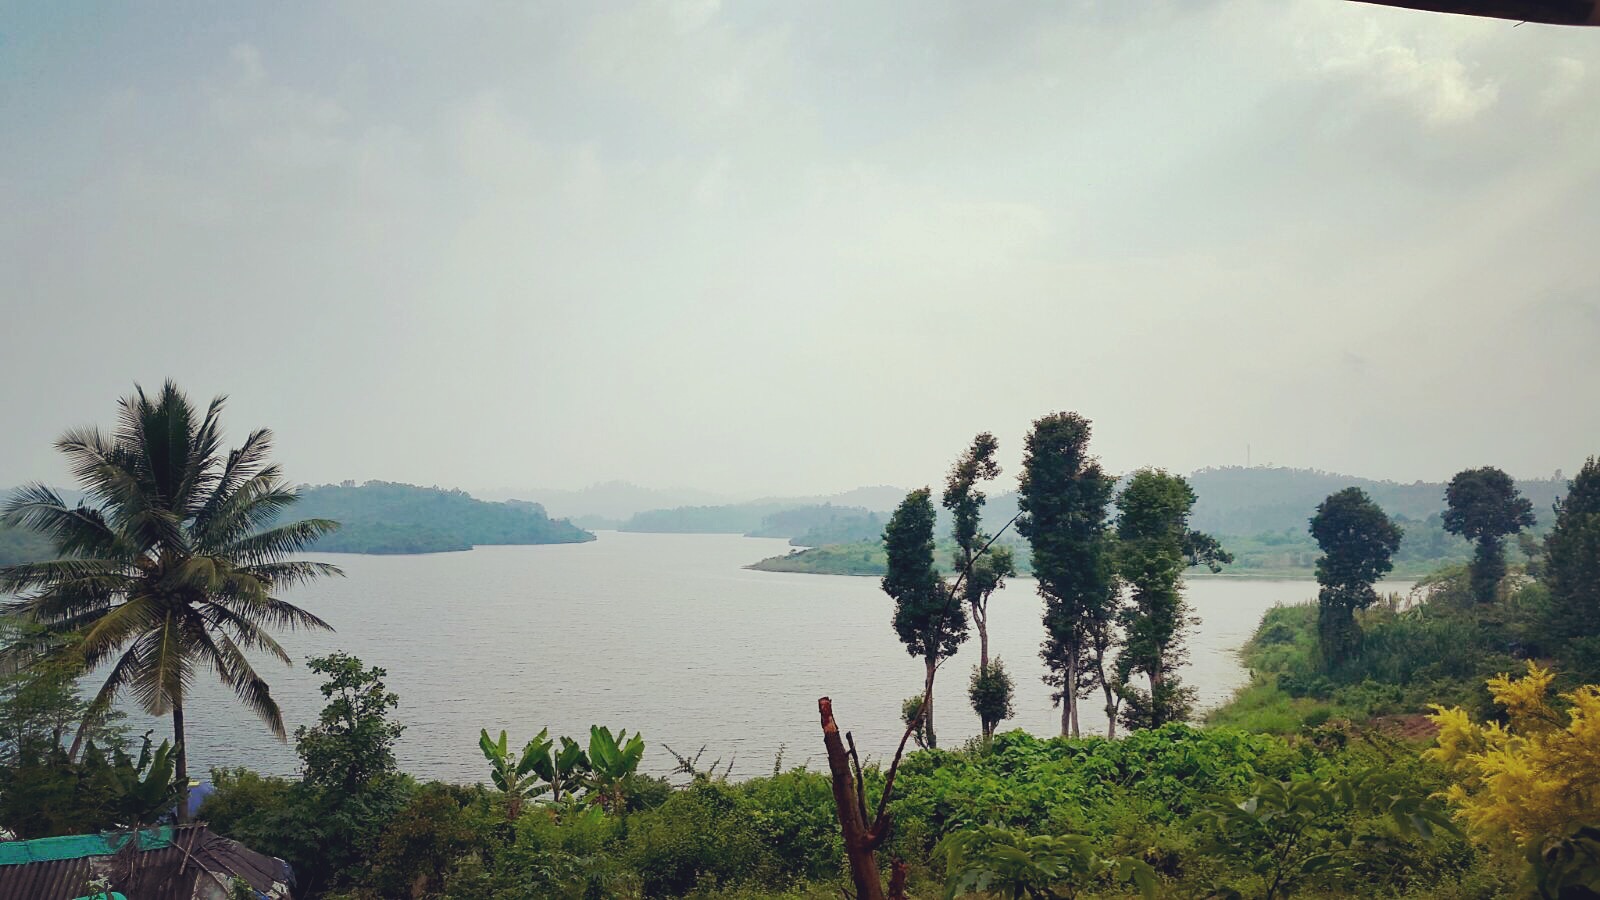 A shot of Karapuzha reservoir from our room